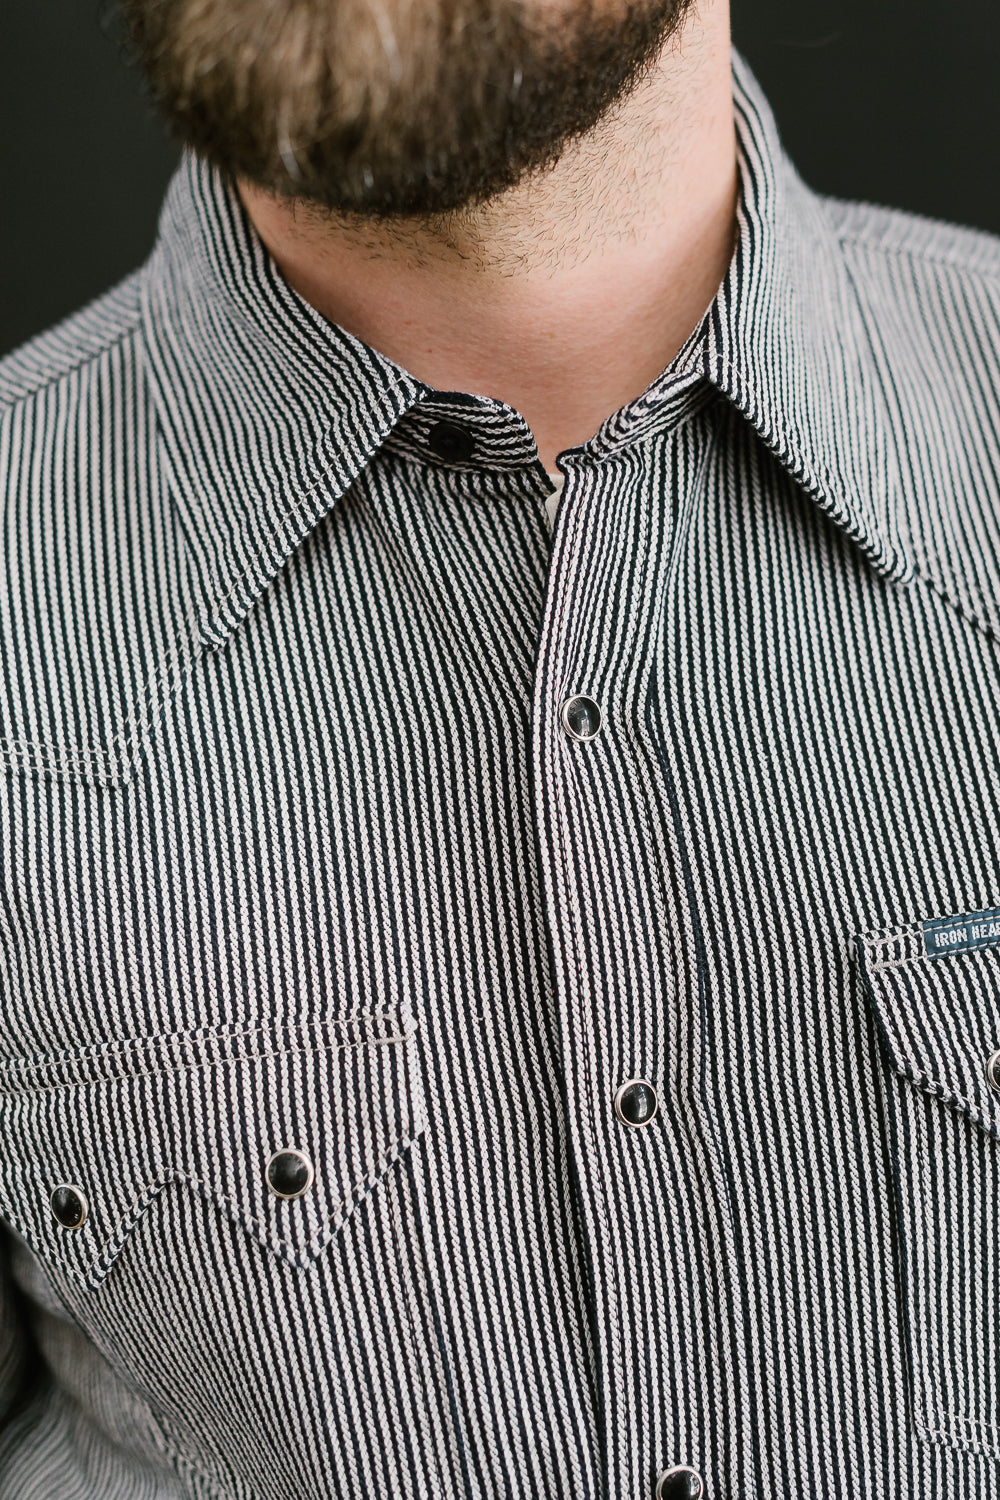 IHSH-365-IND - 8oz Herringbone Hickory Stripe Sawtooth Western Shirt - Indigo